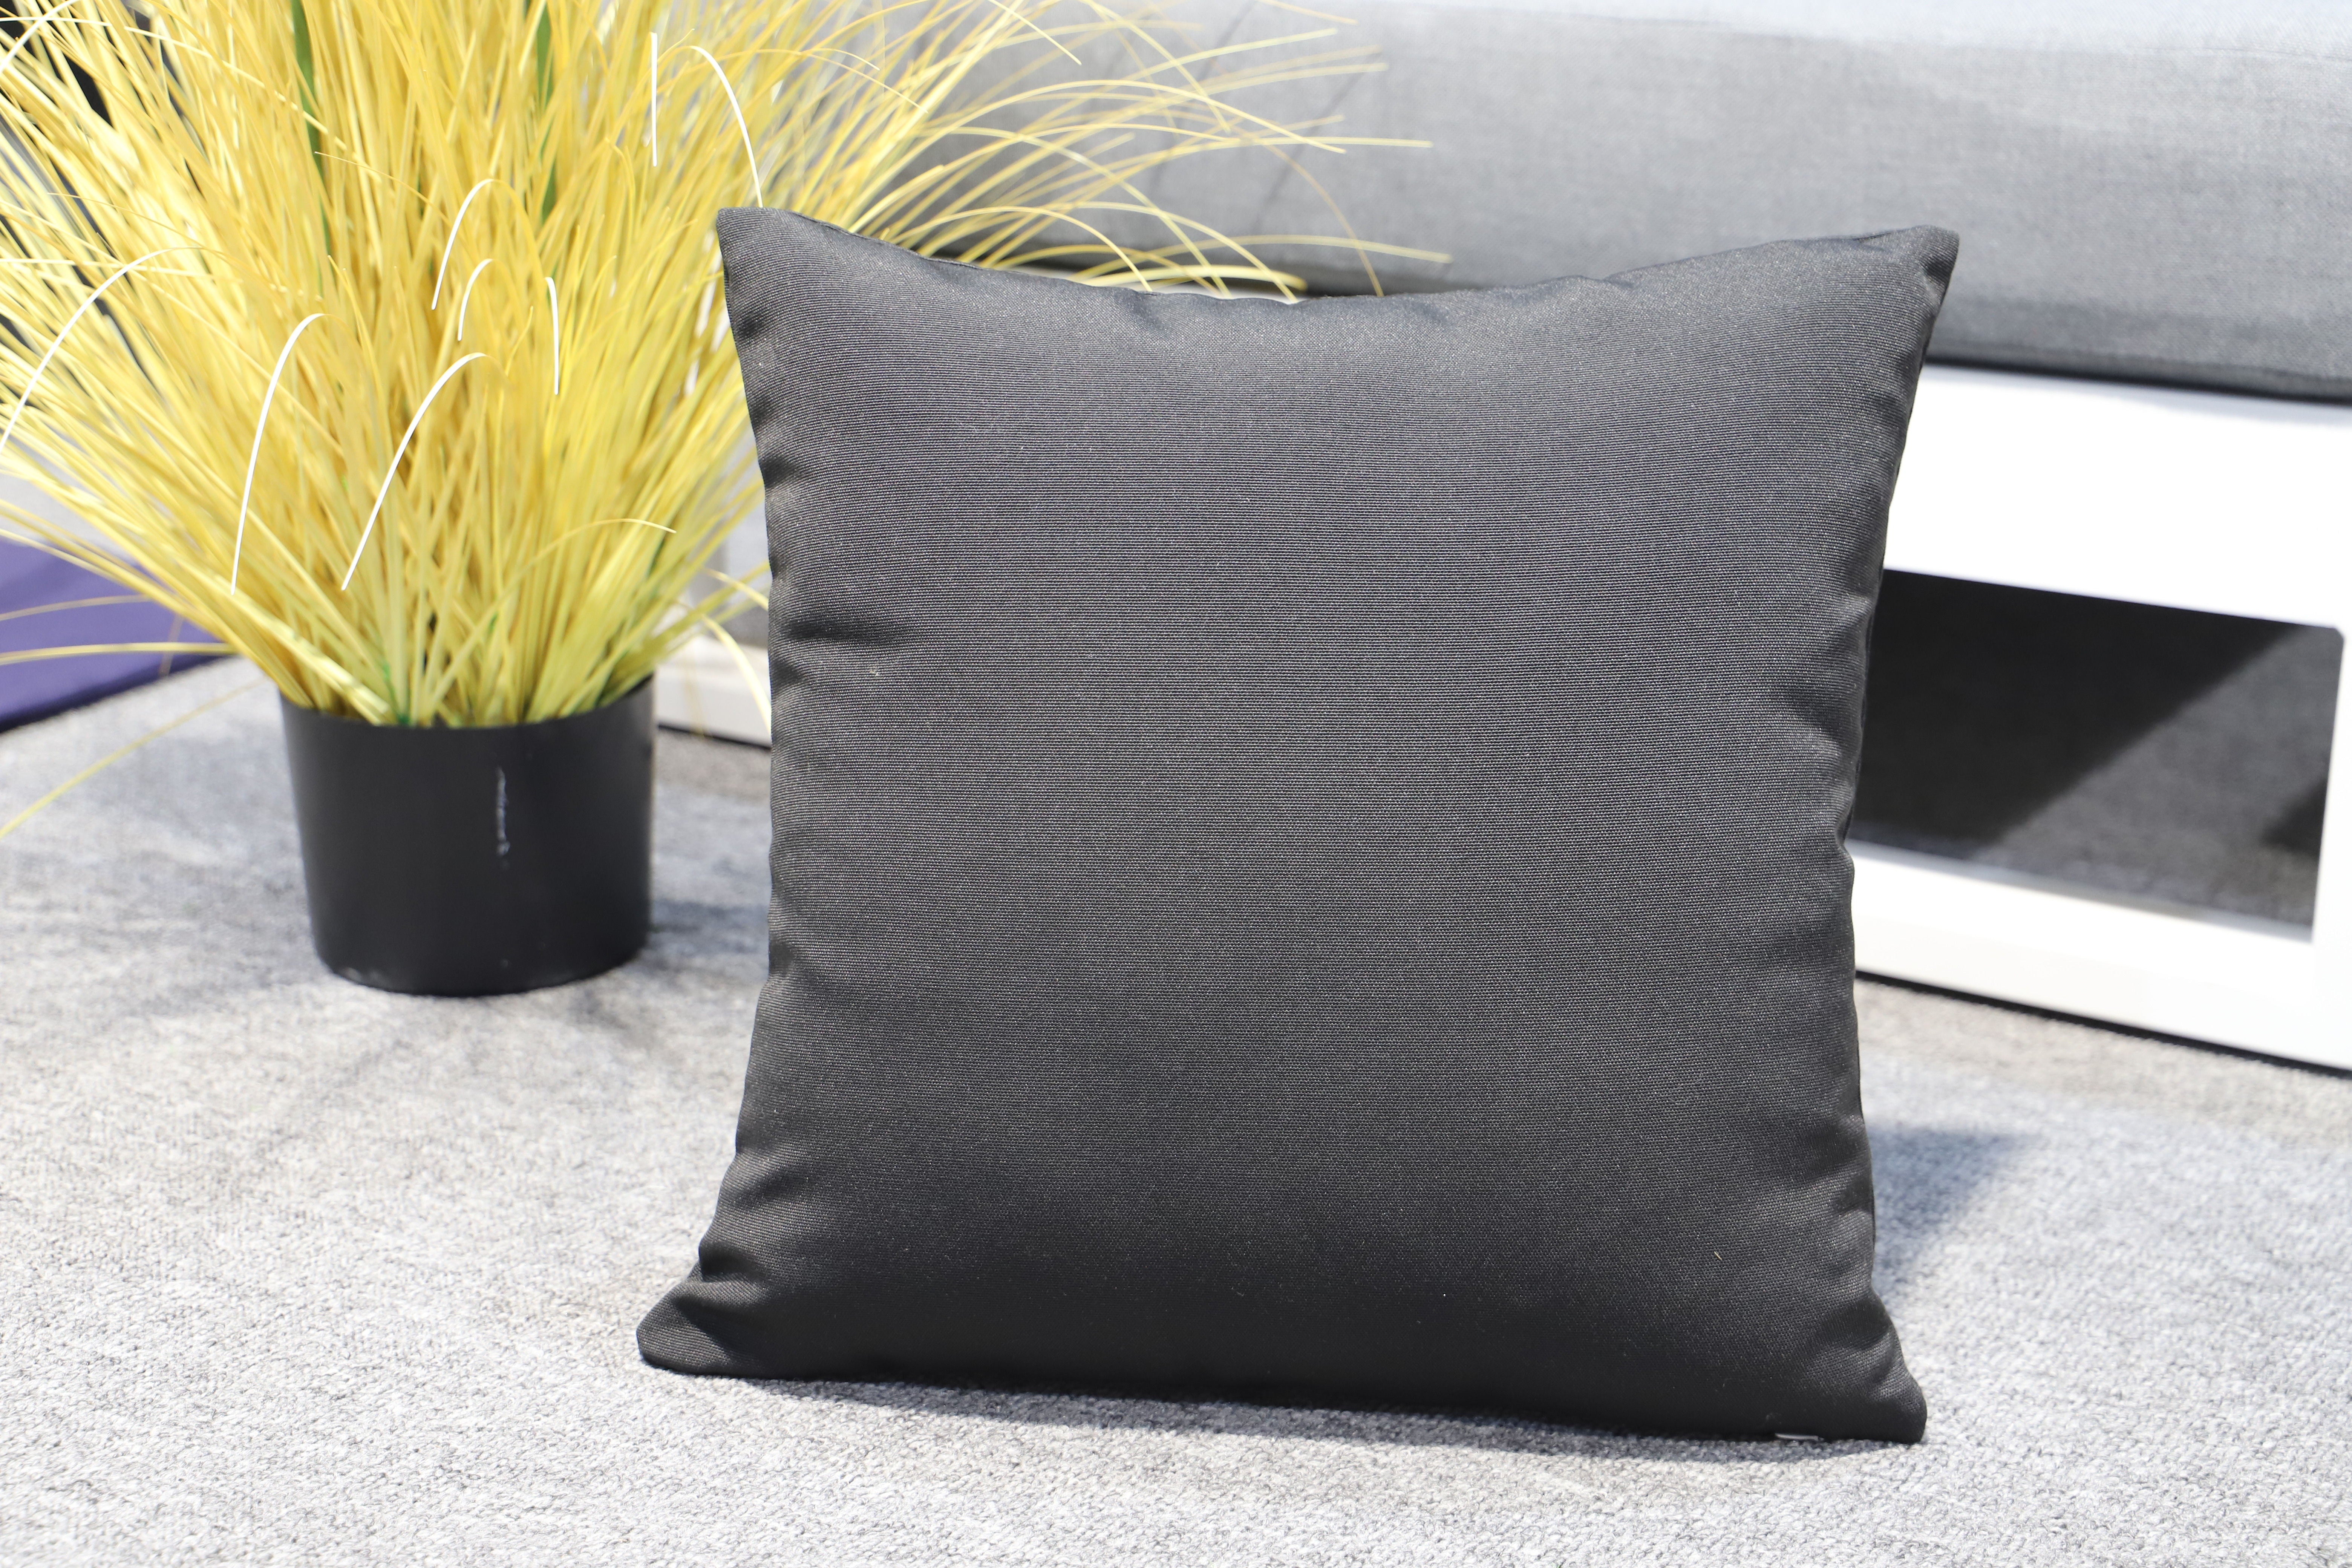 MOSS MOSS-0911N - 16 "x16" BLACK plain decorative cushion